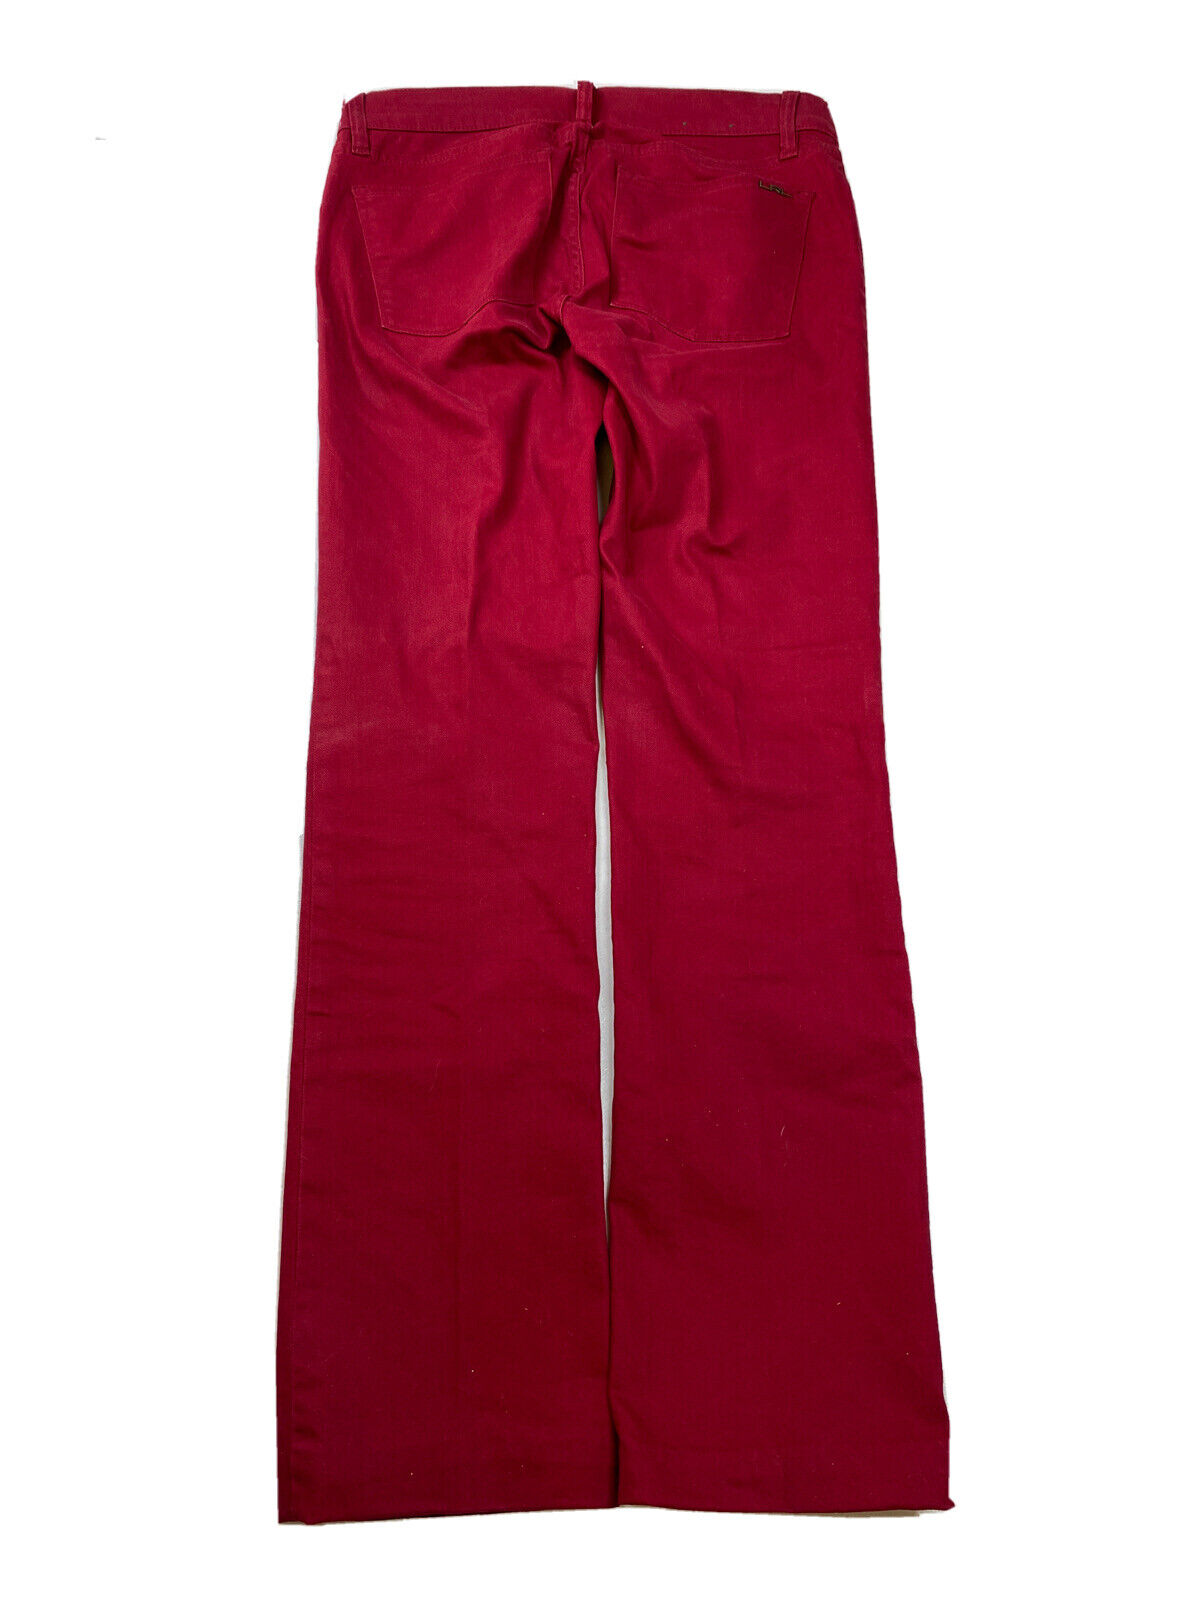 Lauren Ralph Lauren Women's Red Cotton Blend Straight Fit Denim Jeans - 6